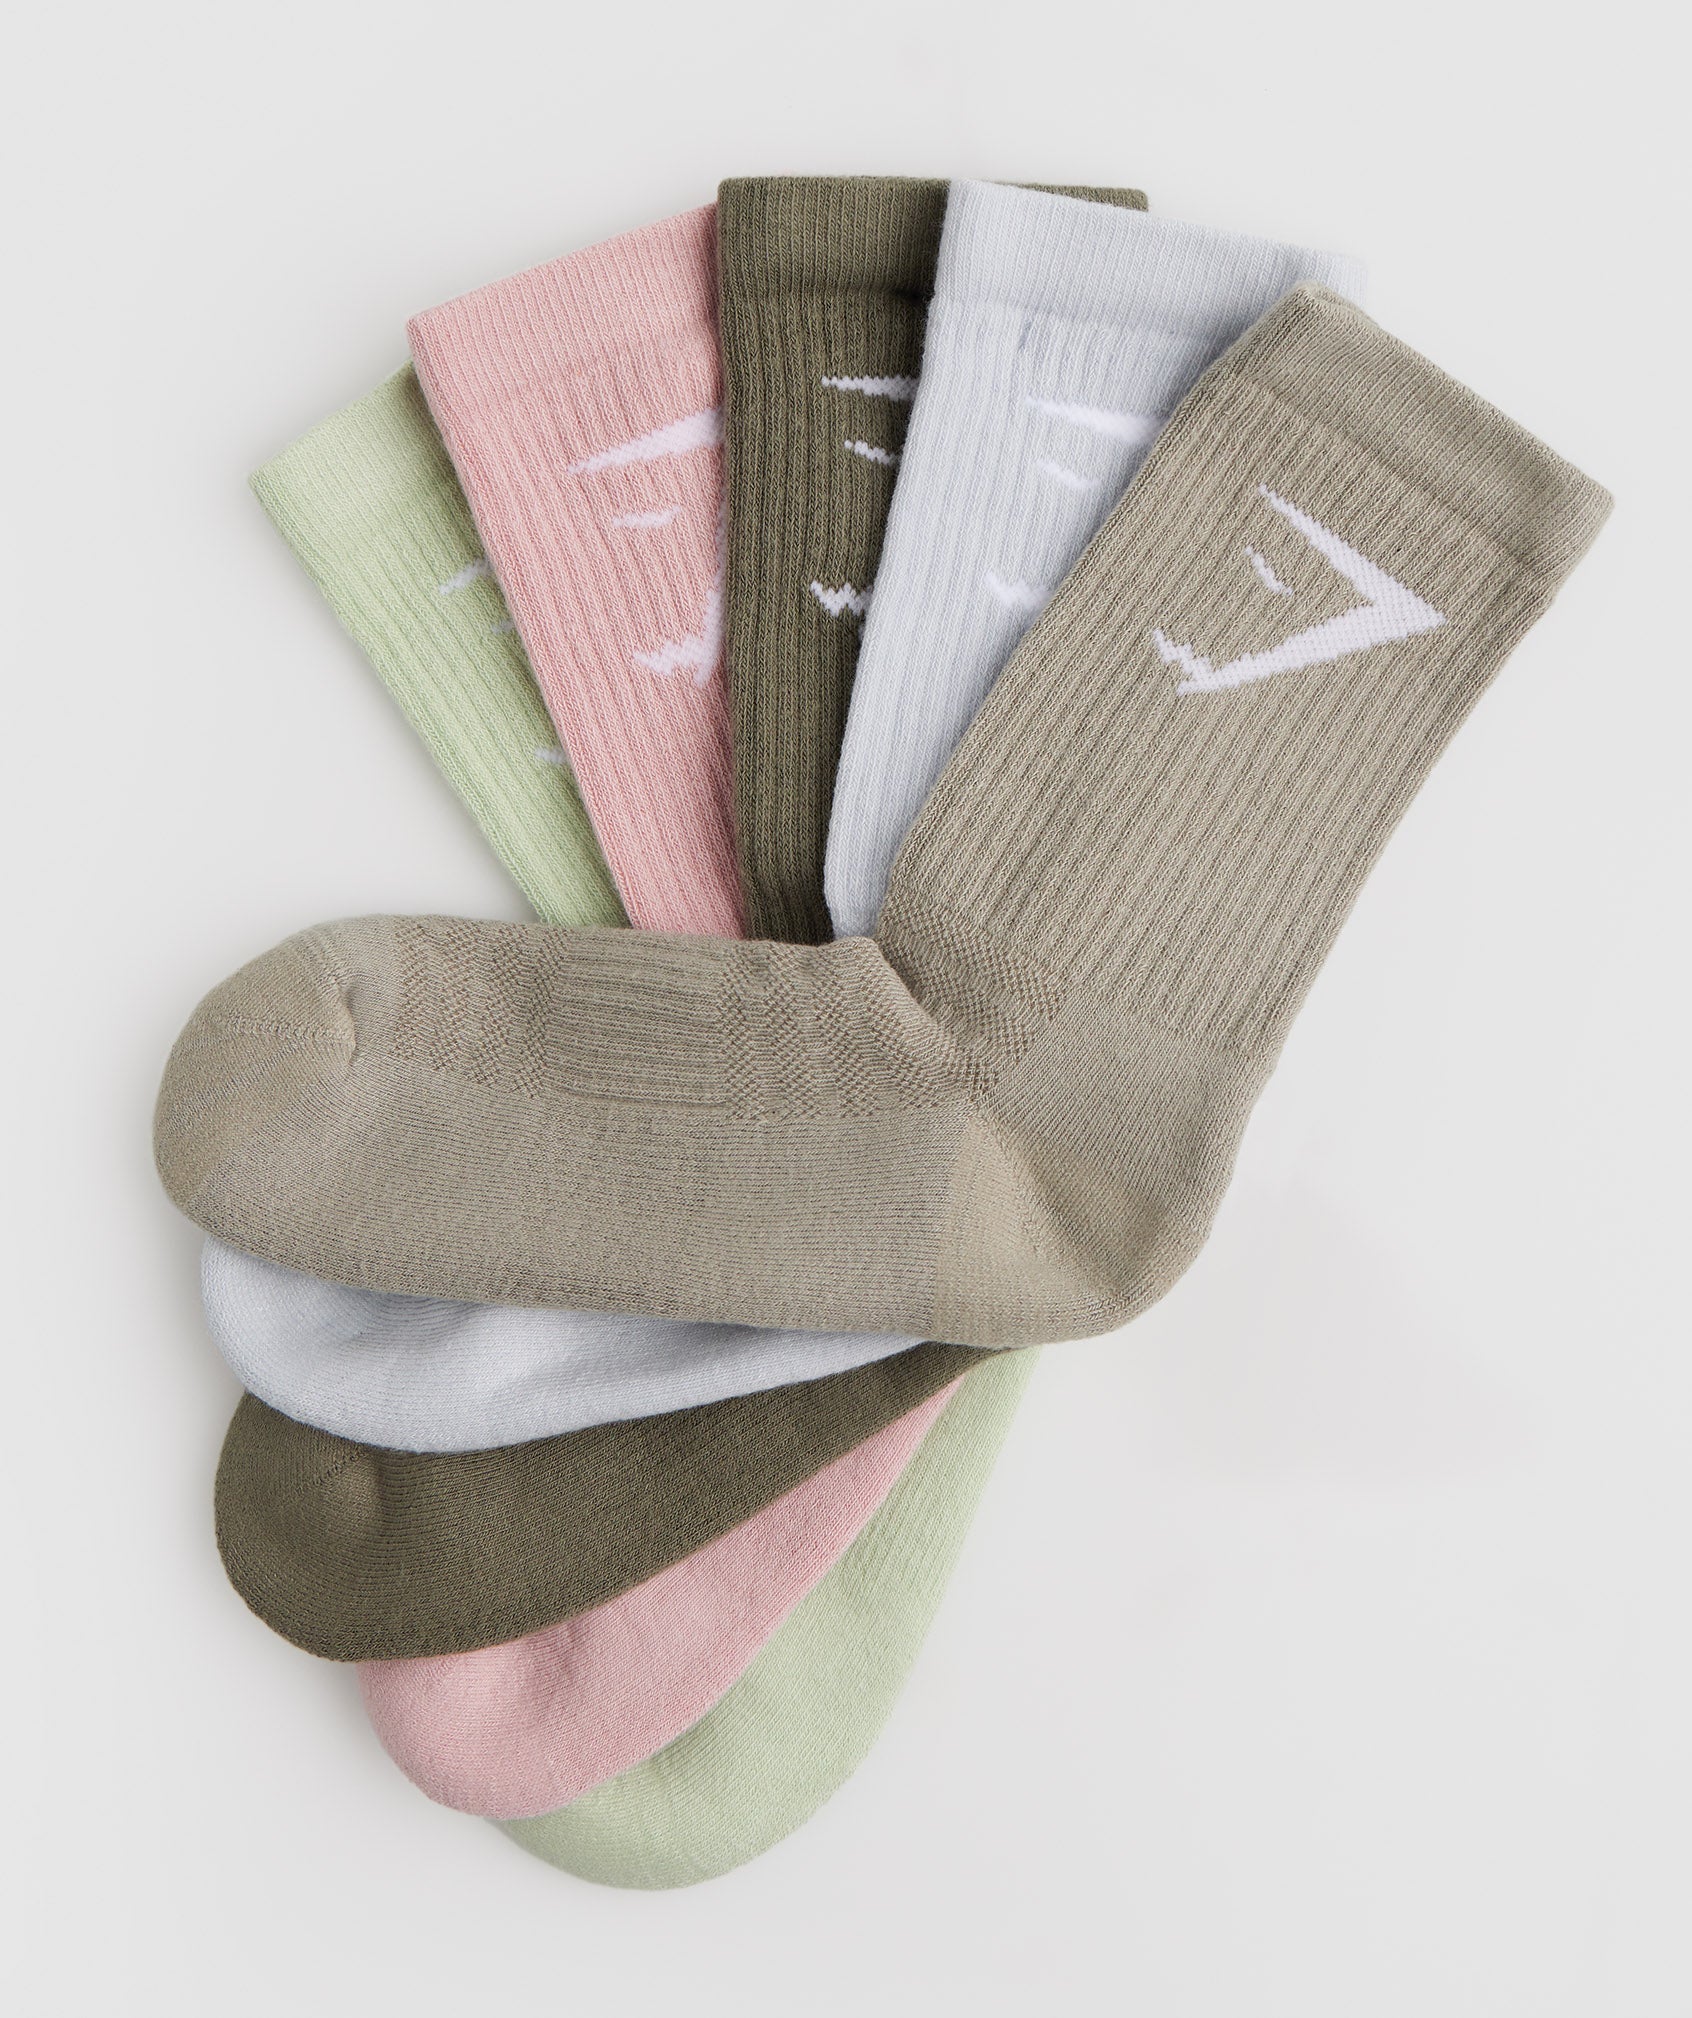 Crew Socks 5pk in Pink/Brown/Grey/Green/Olive - view 3